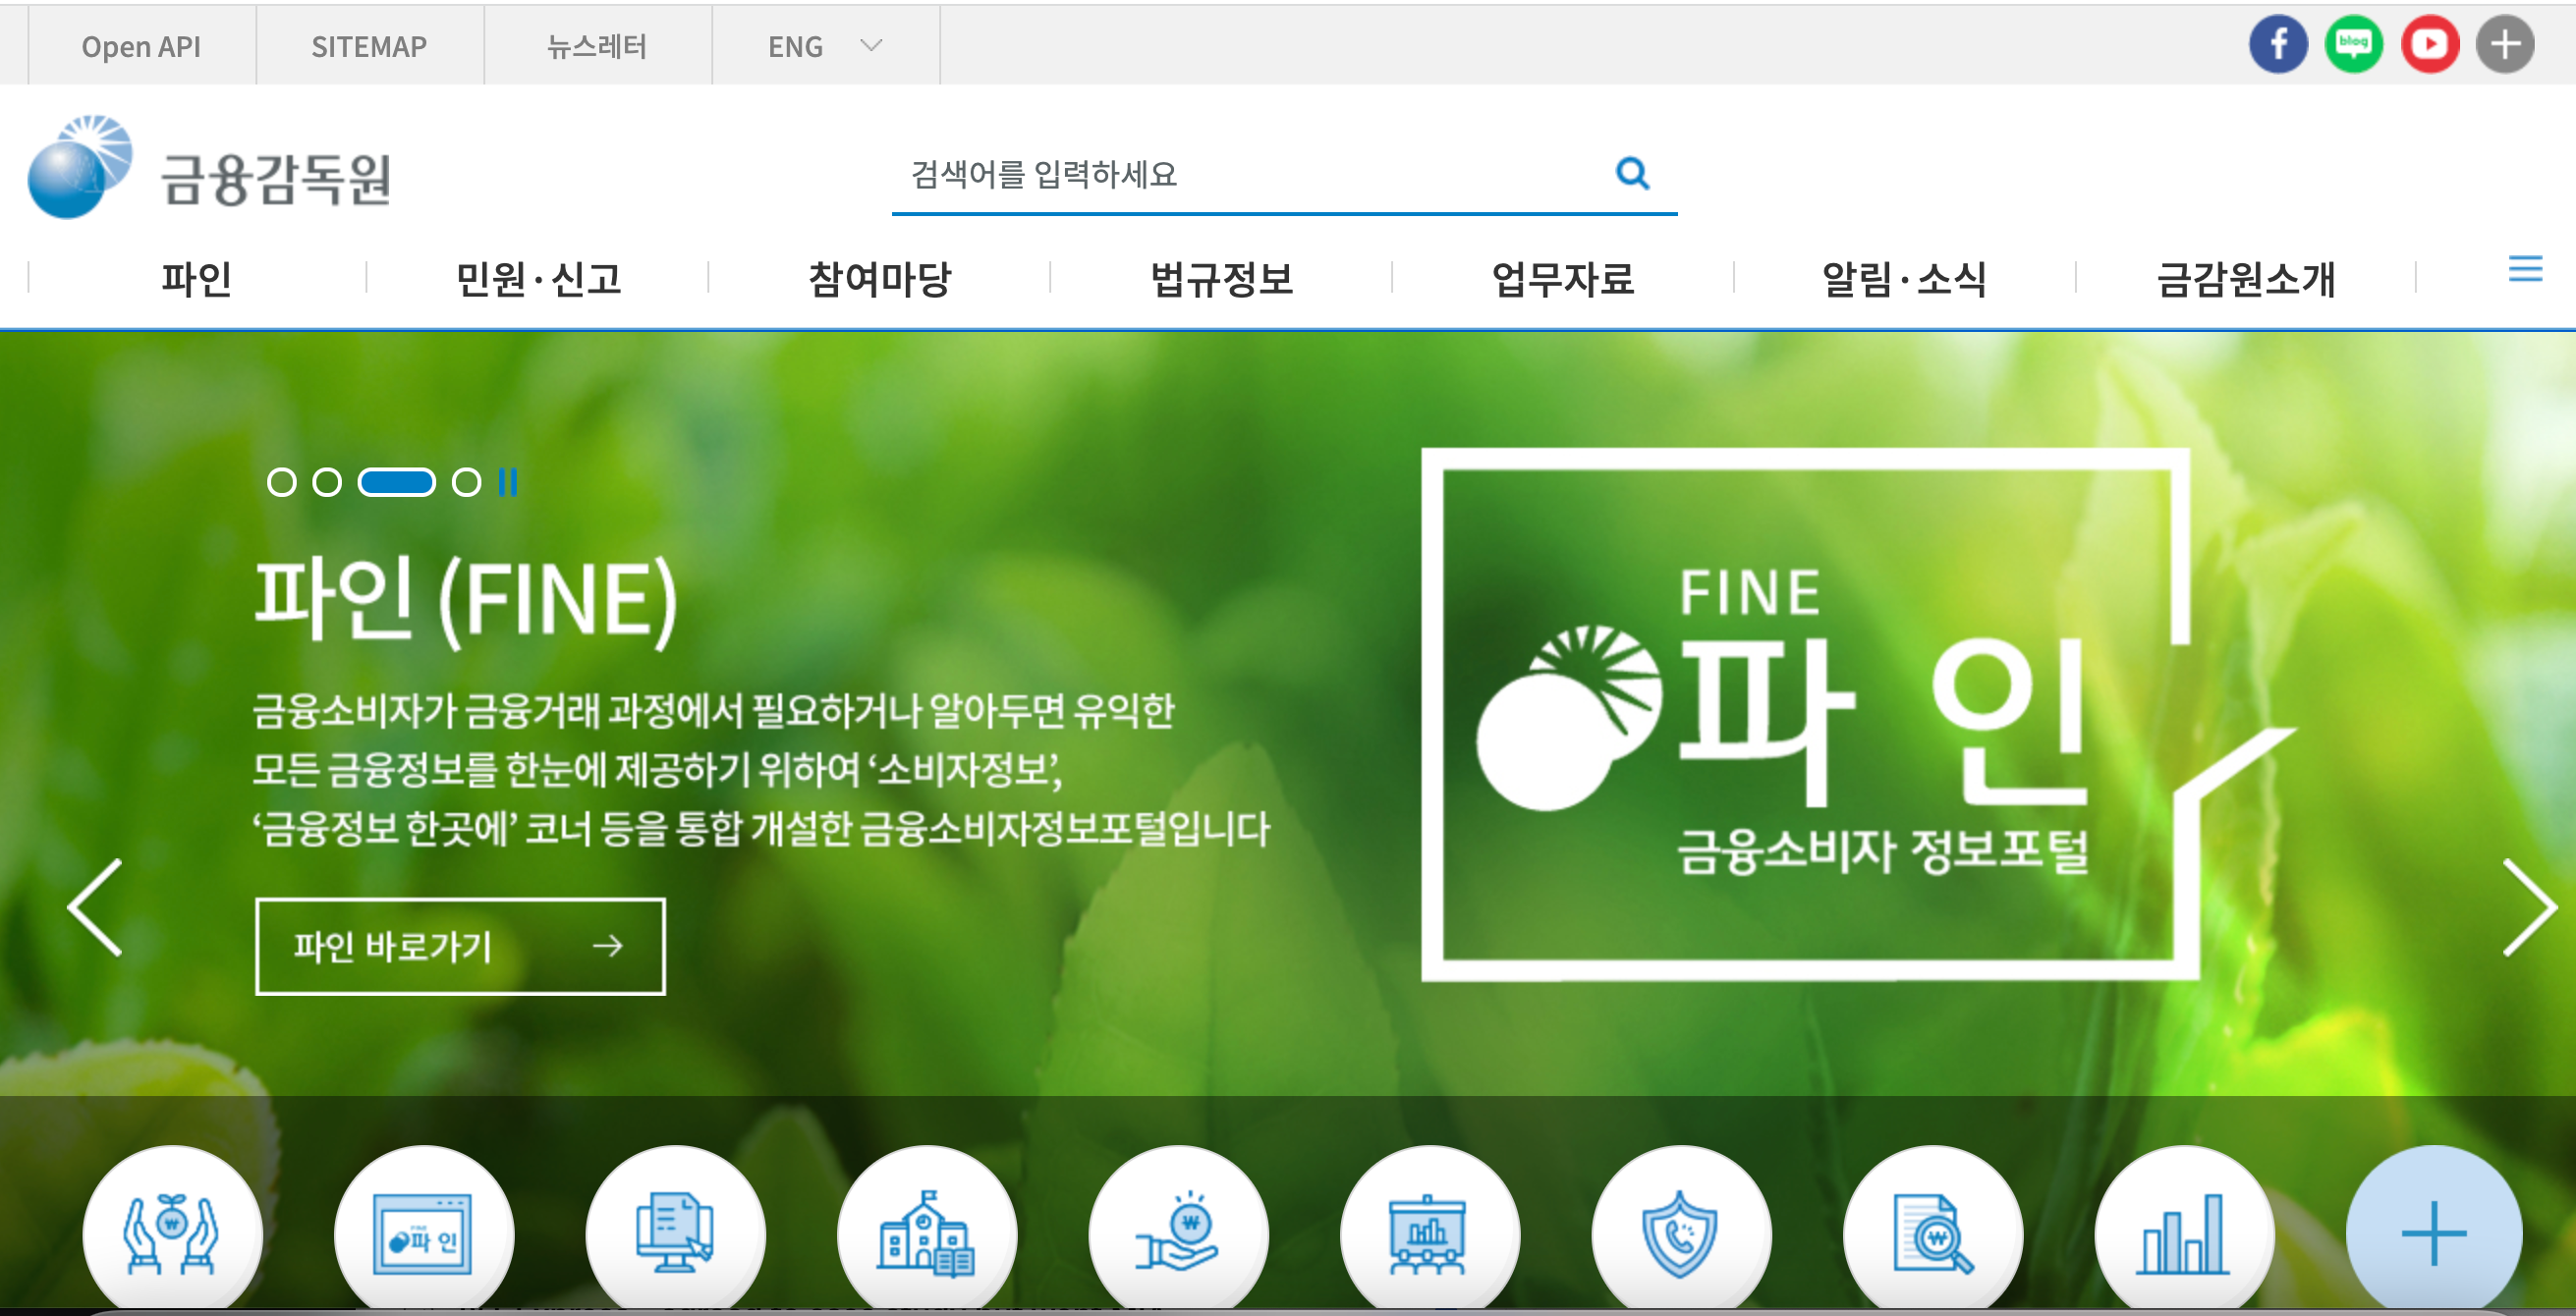 Homepage of the Korean Financial Supervisory Service website in Korean